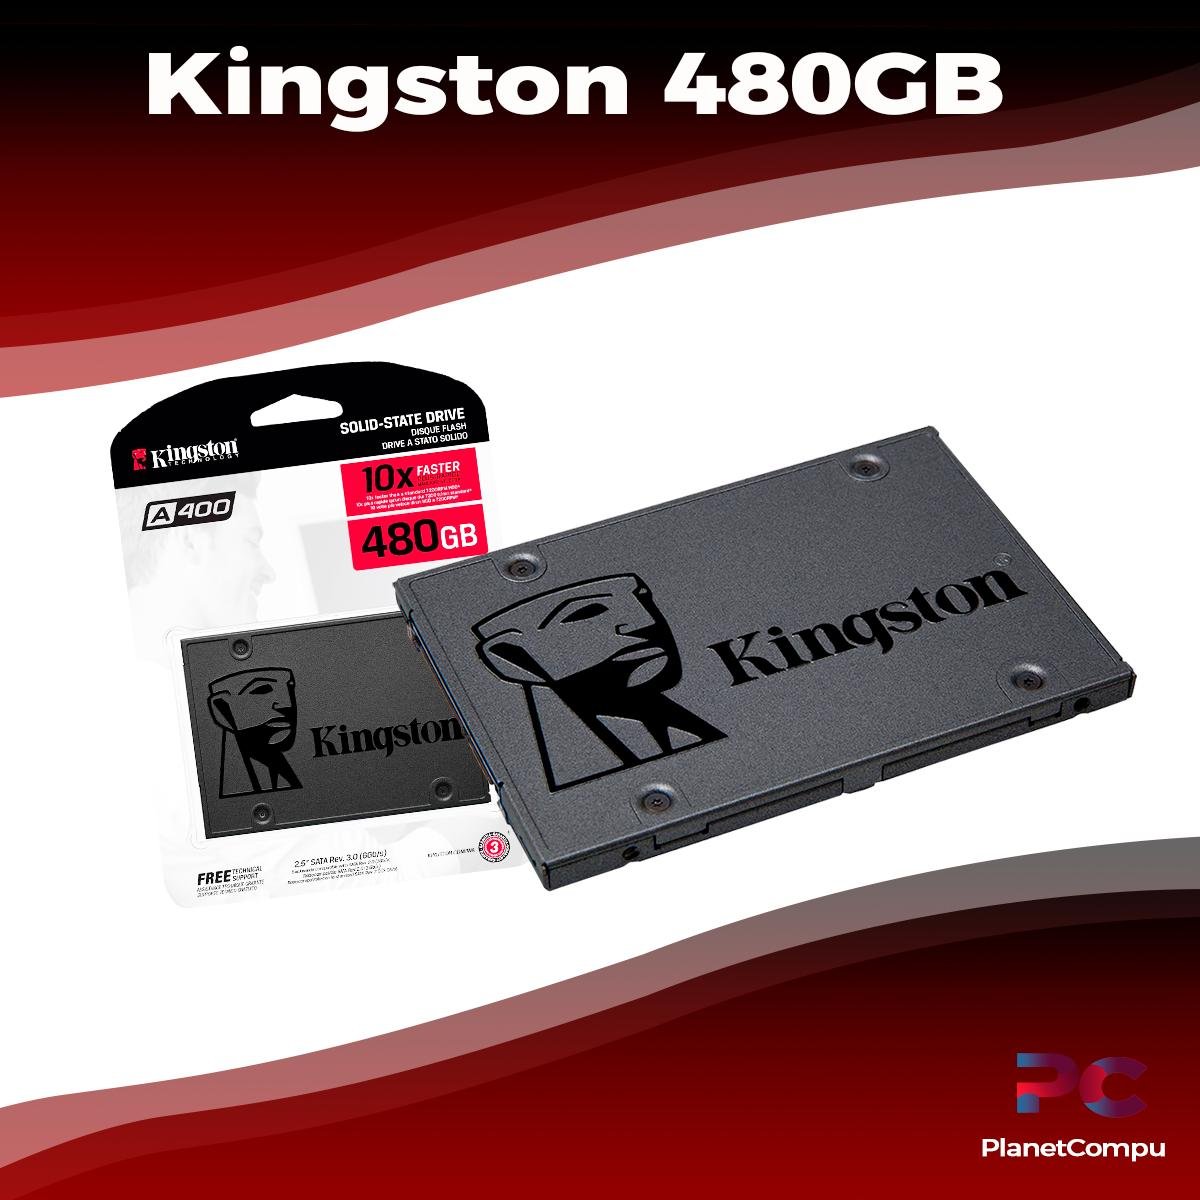 Kingston GB A400 – – componentes PC